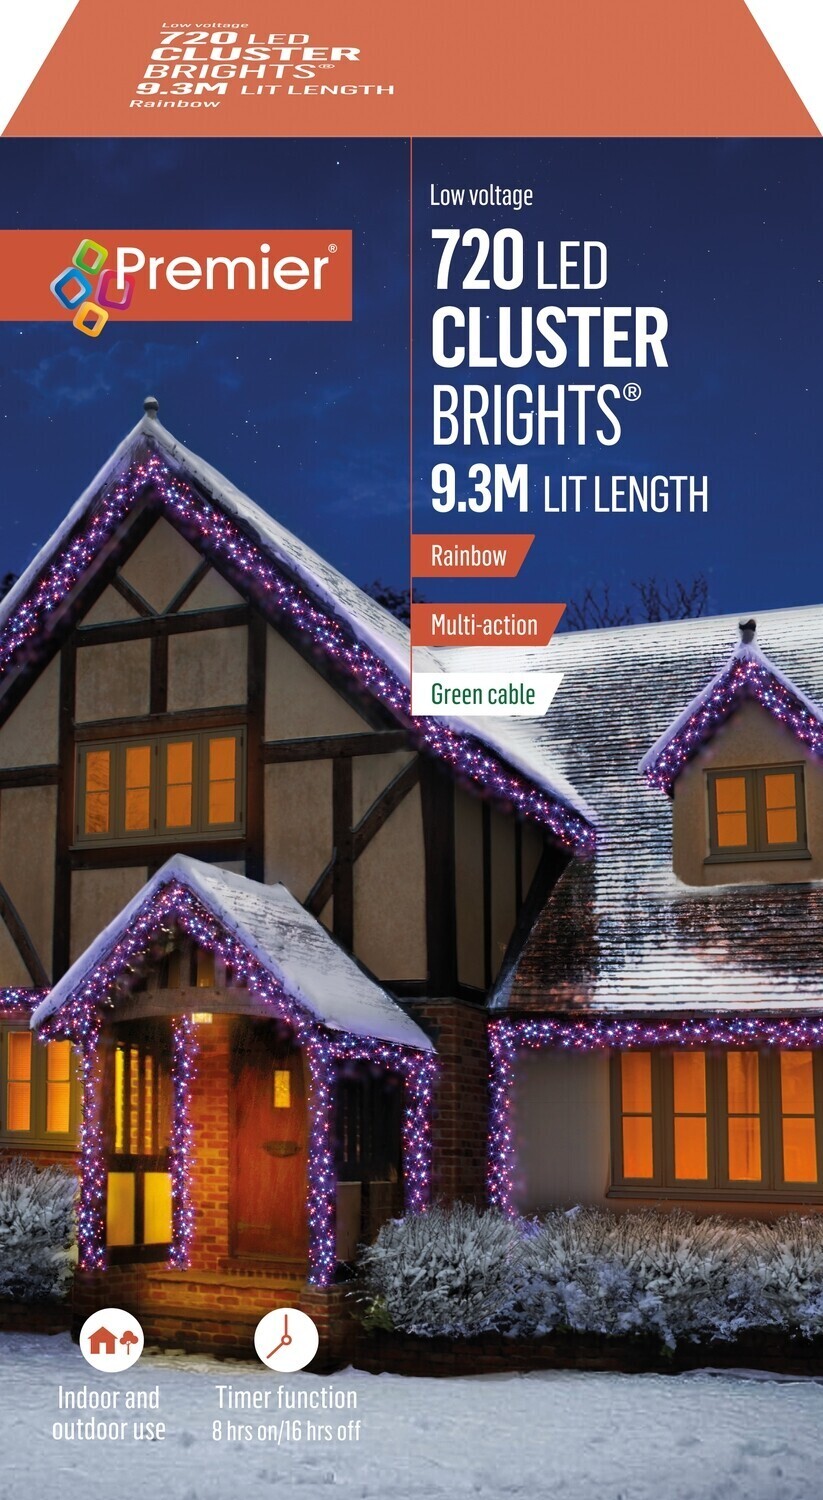 Premier Rainbow 720 LED Cluster Brights